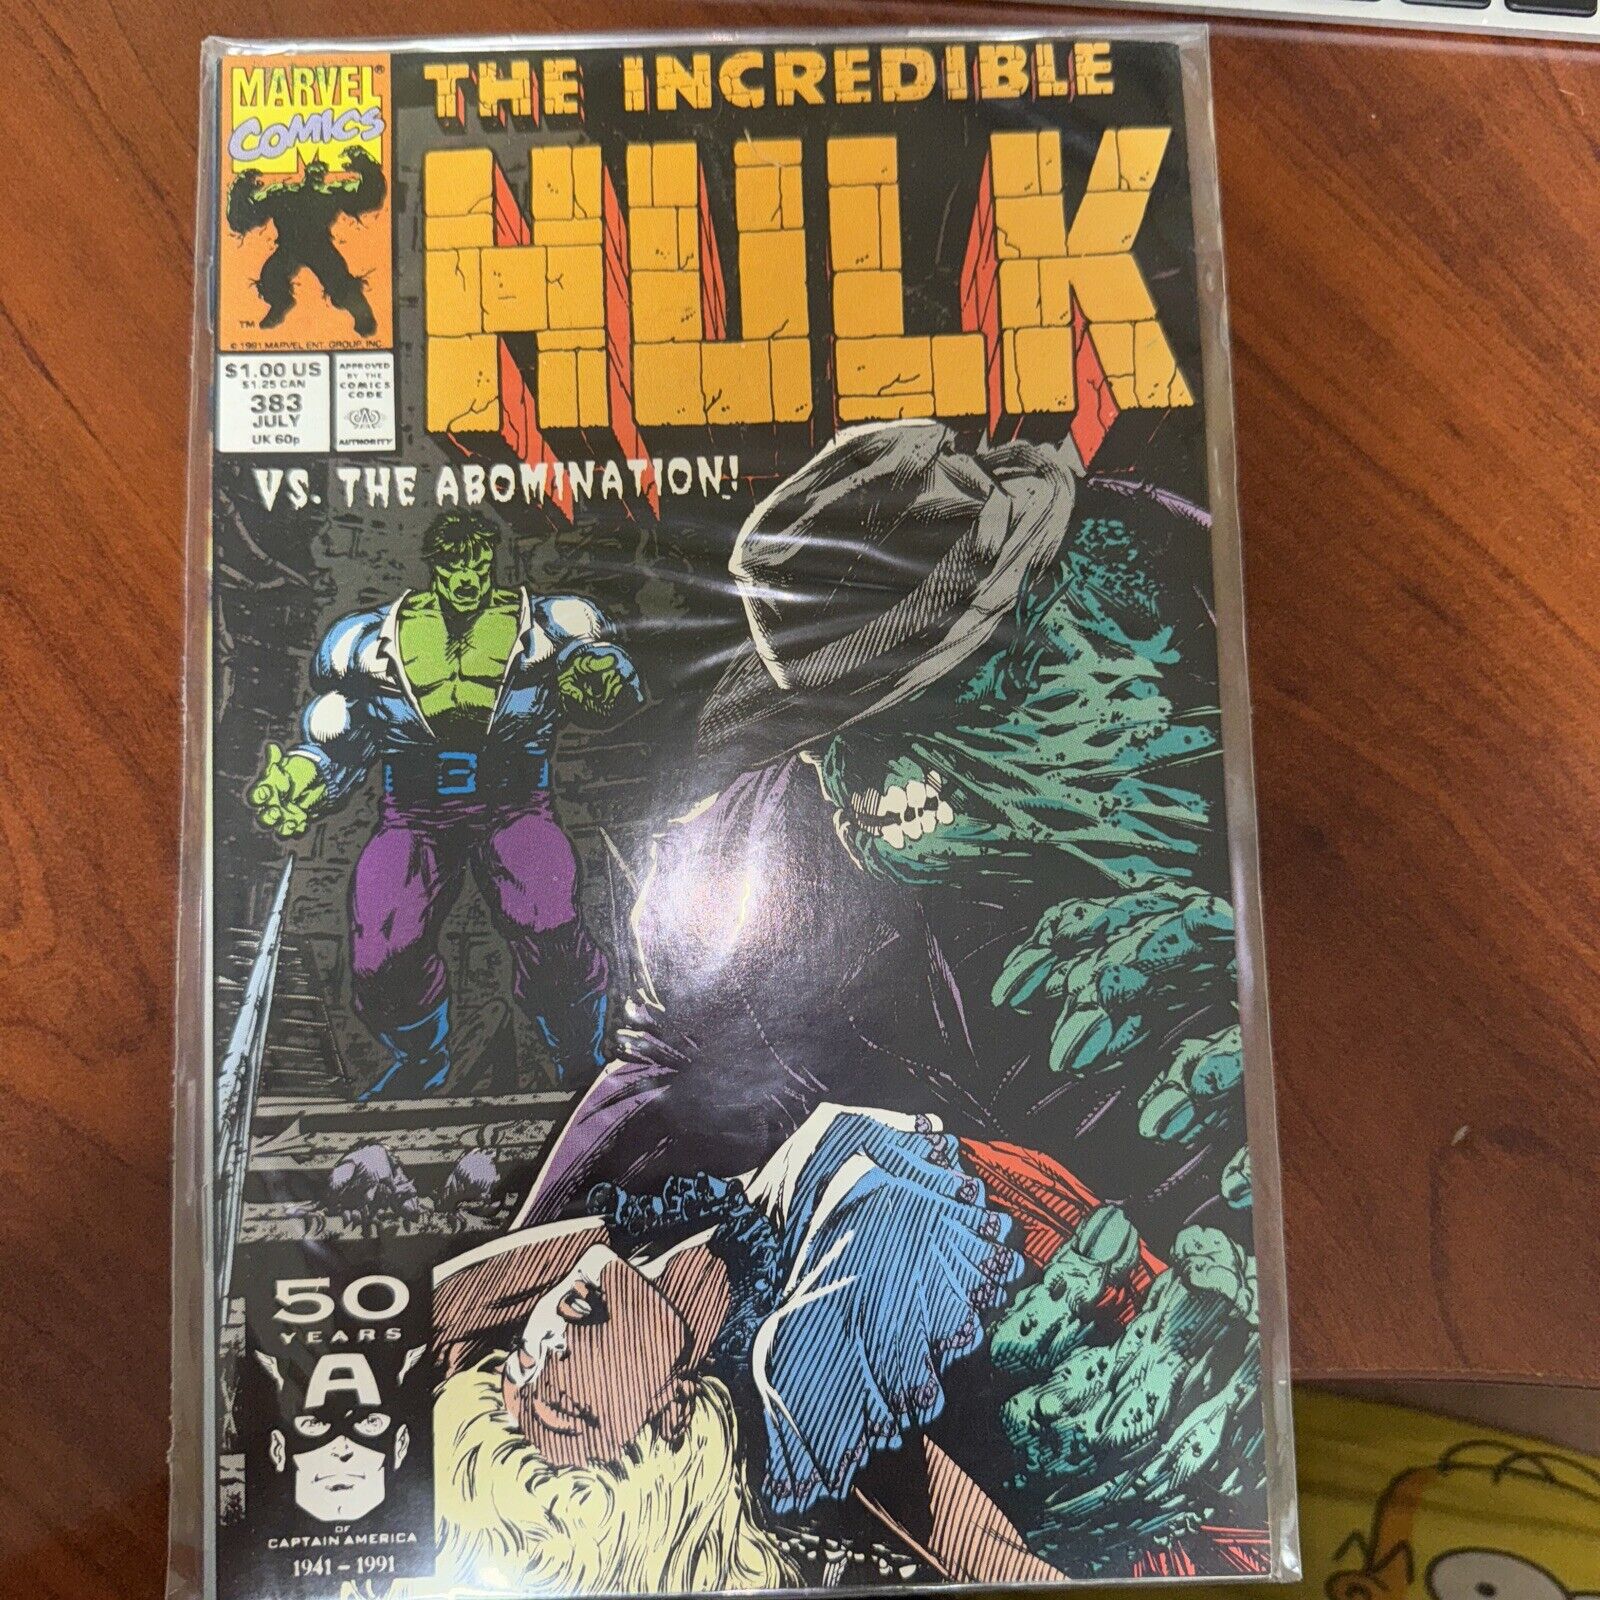 The Incredible Hulk #383 (Marvel Comics July 1991)